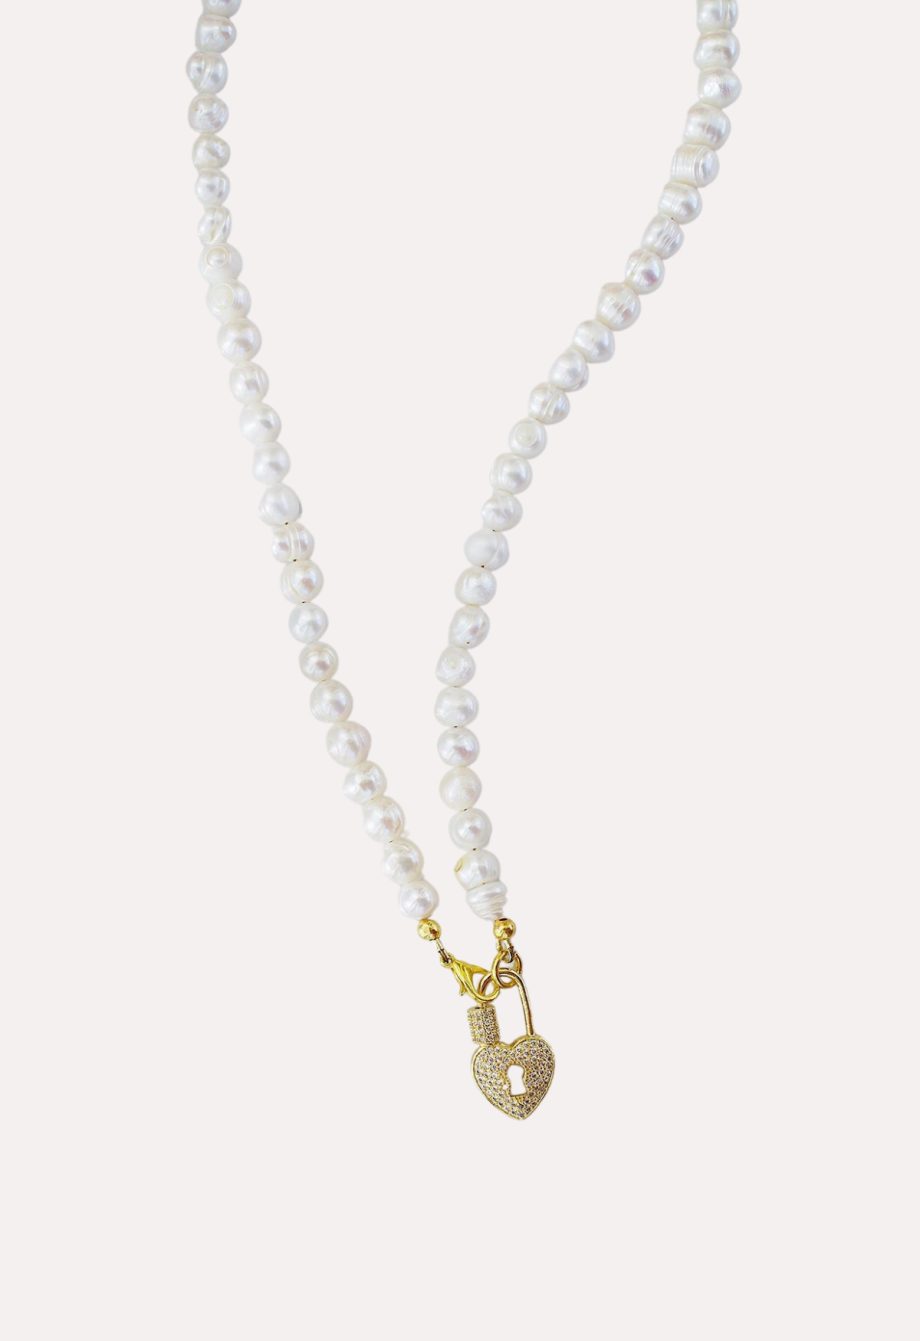 Heart padlock pearls necklace